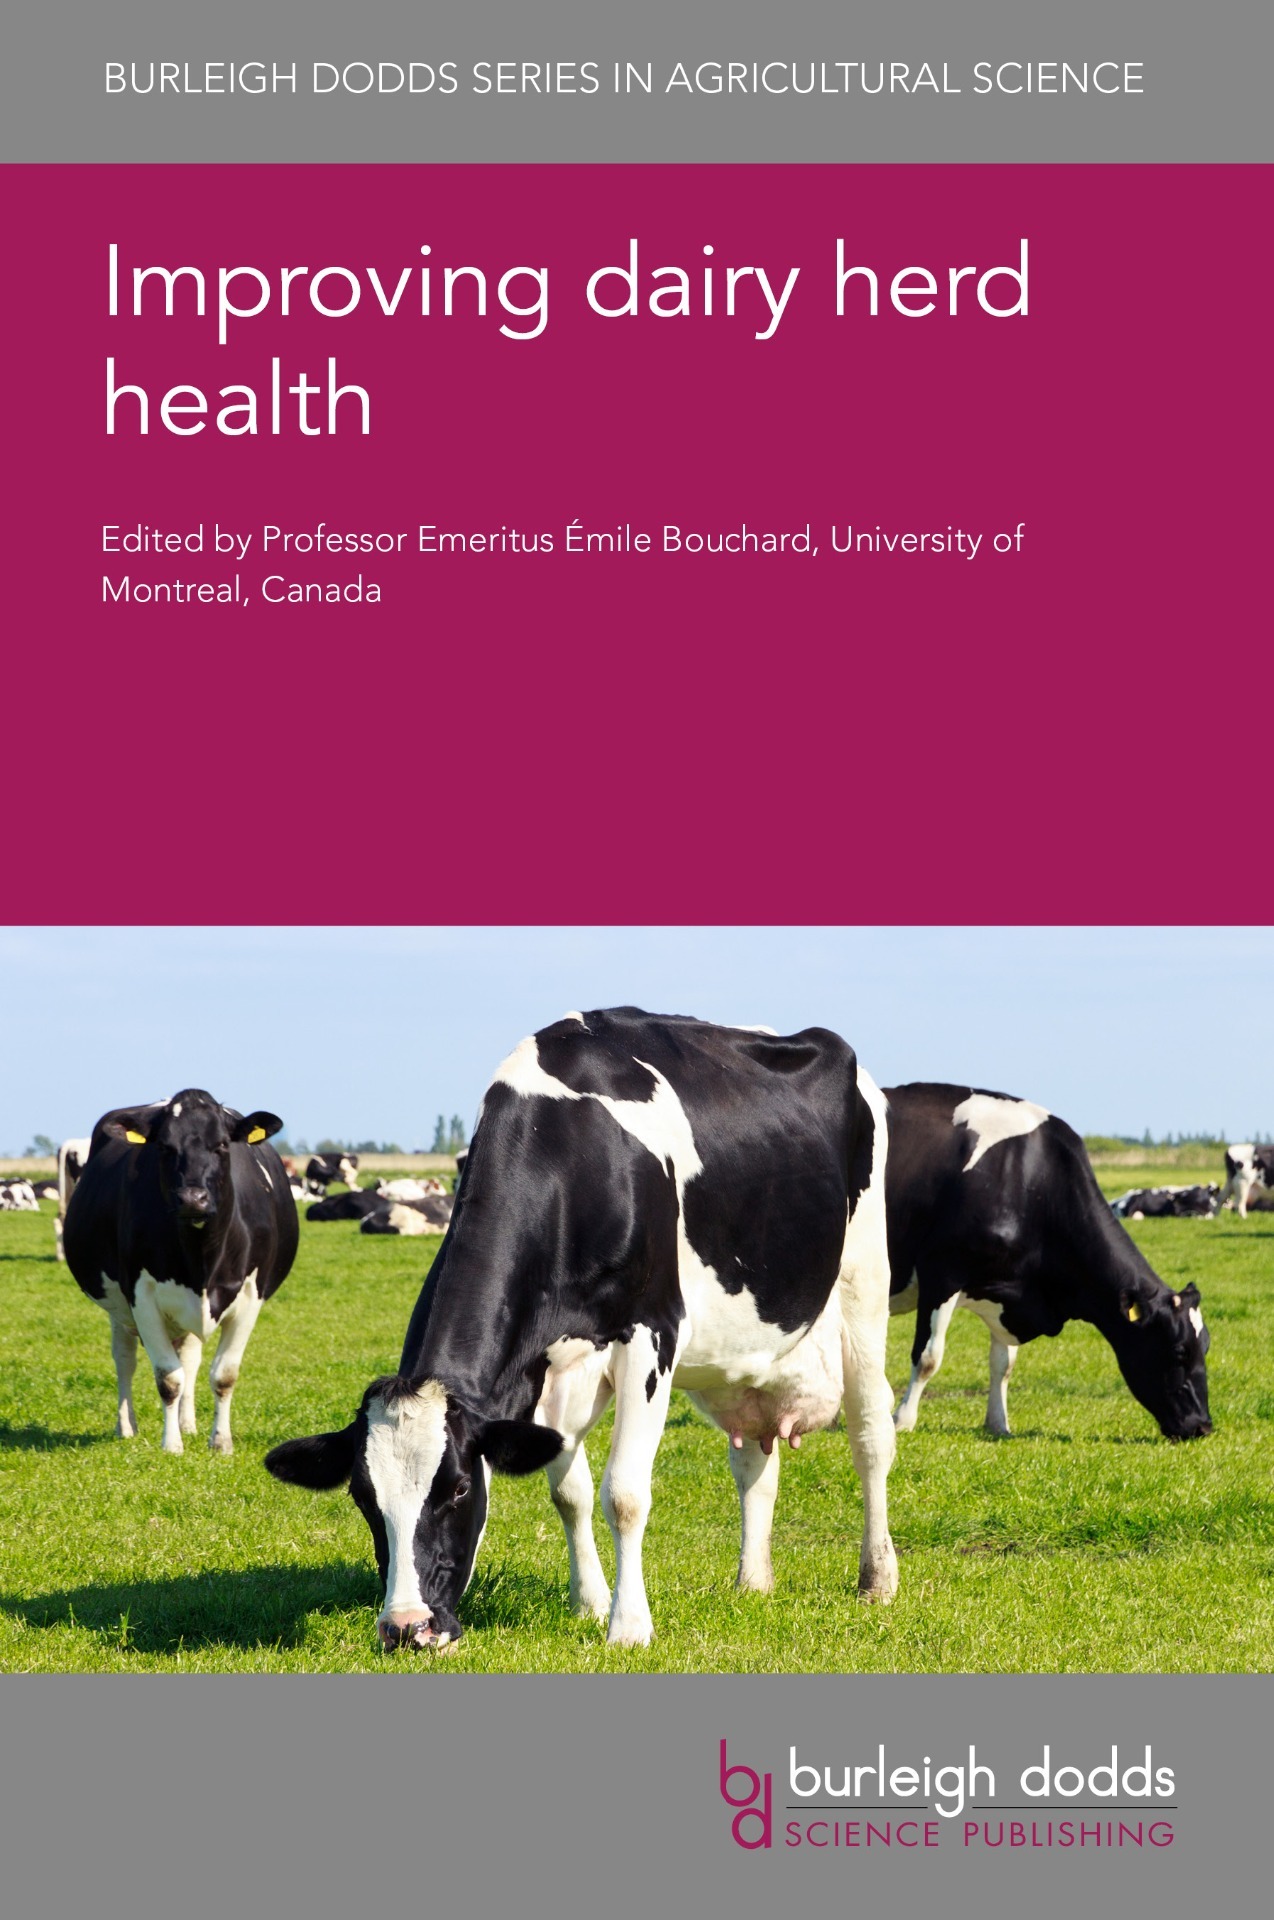 Improving dairy herd health